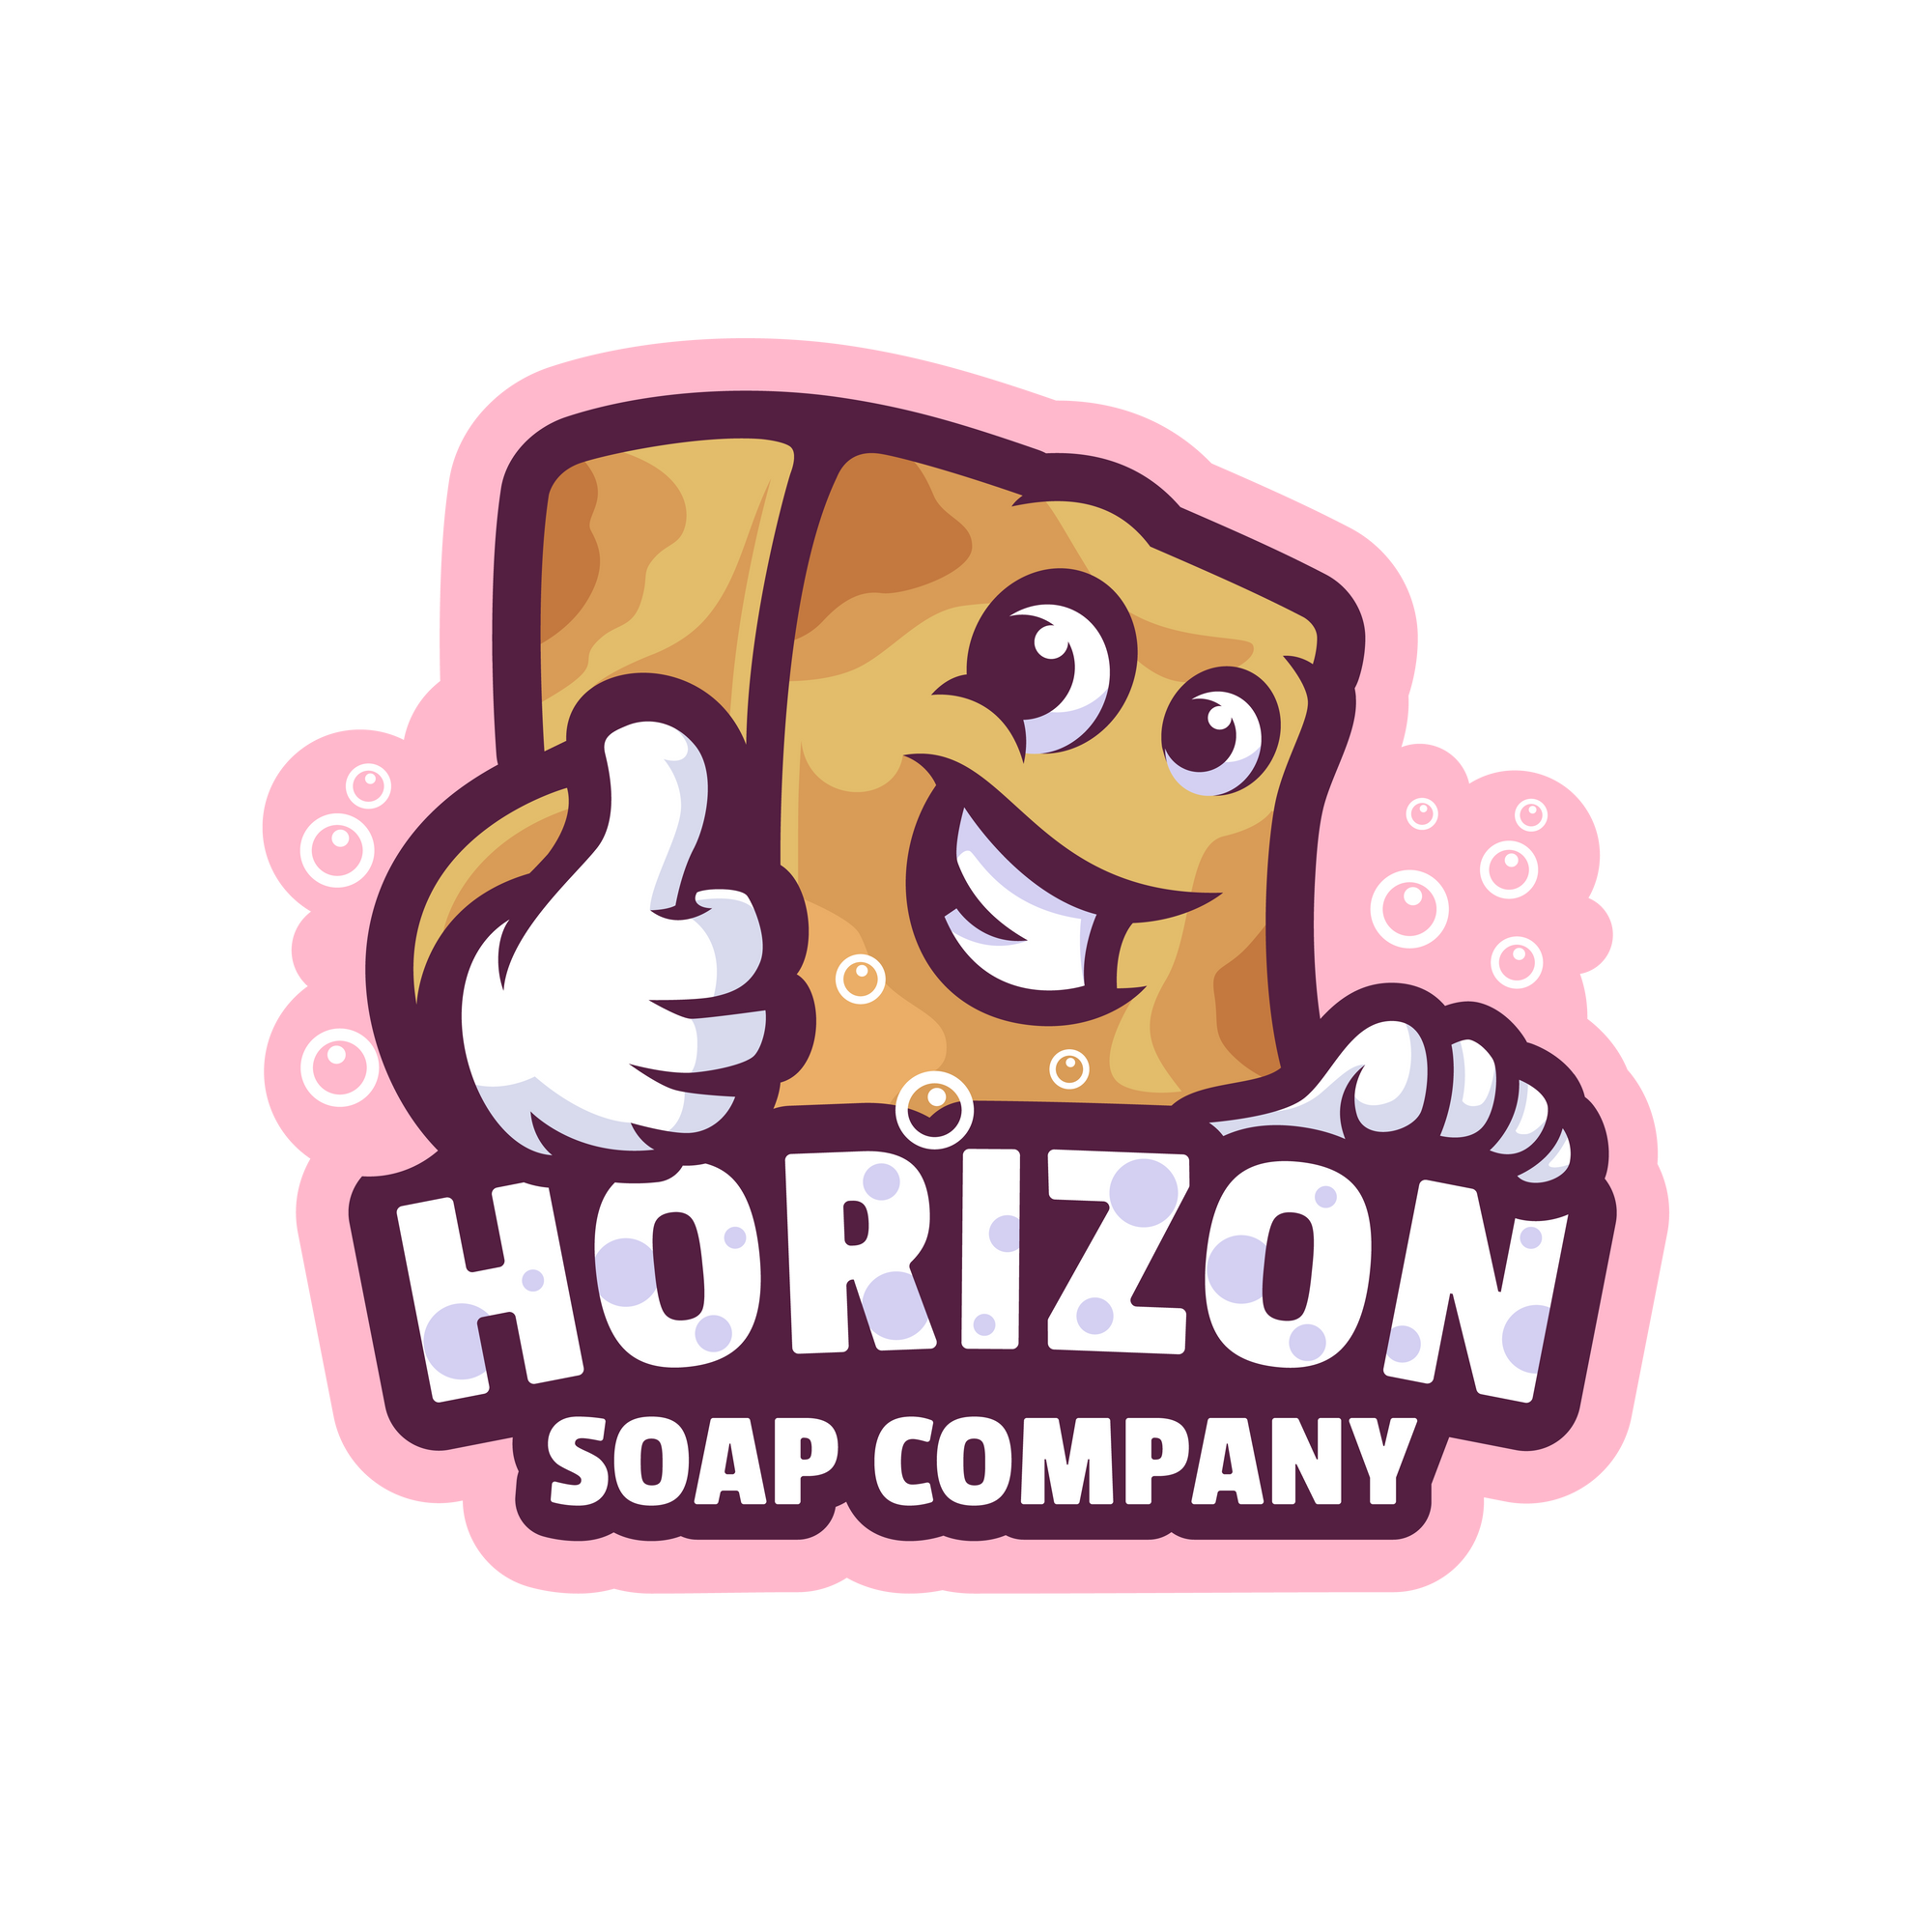 Don't Just Smell Good, Feel Good - Horizon Soap Company